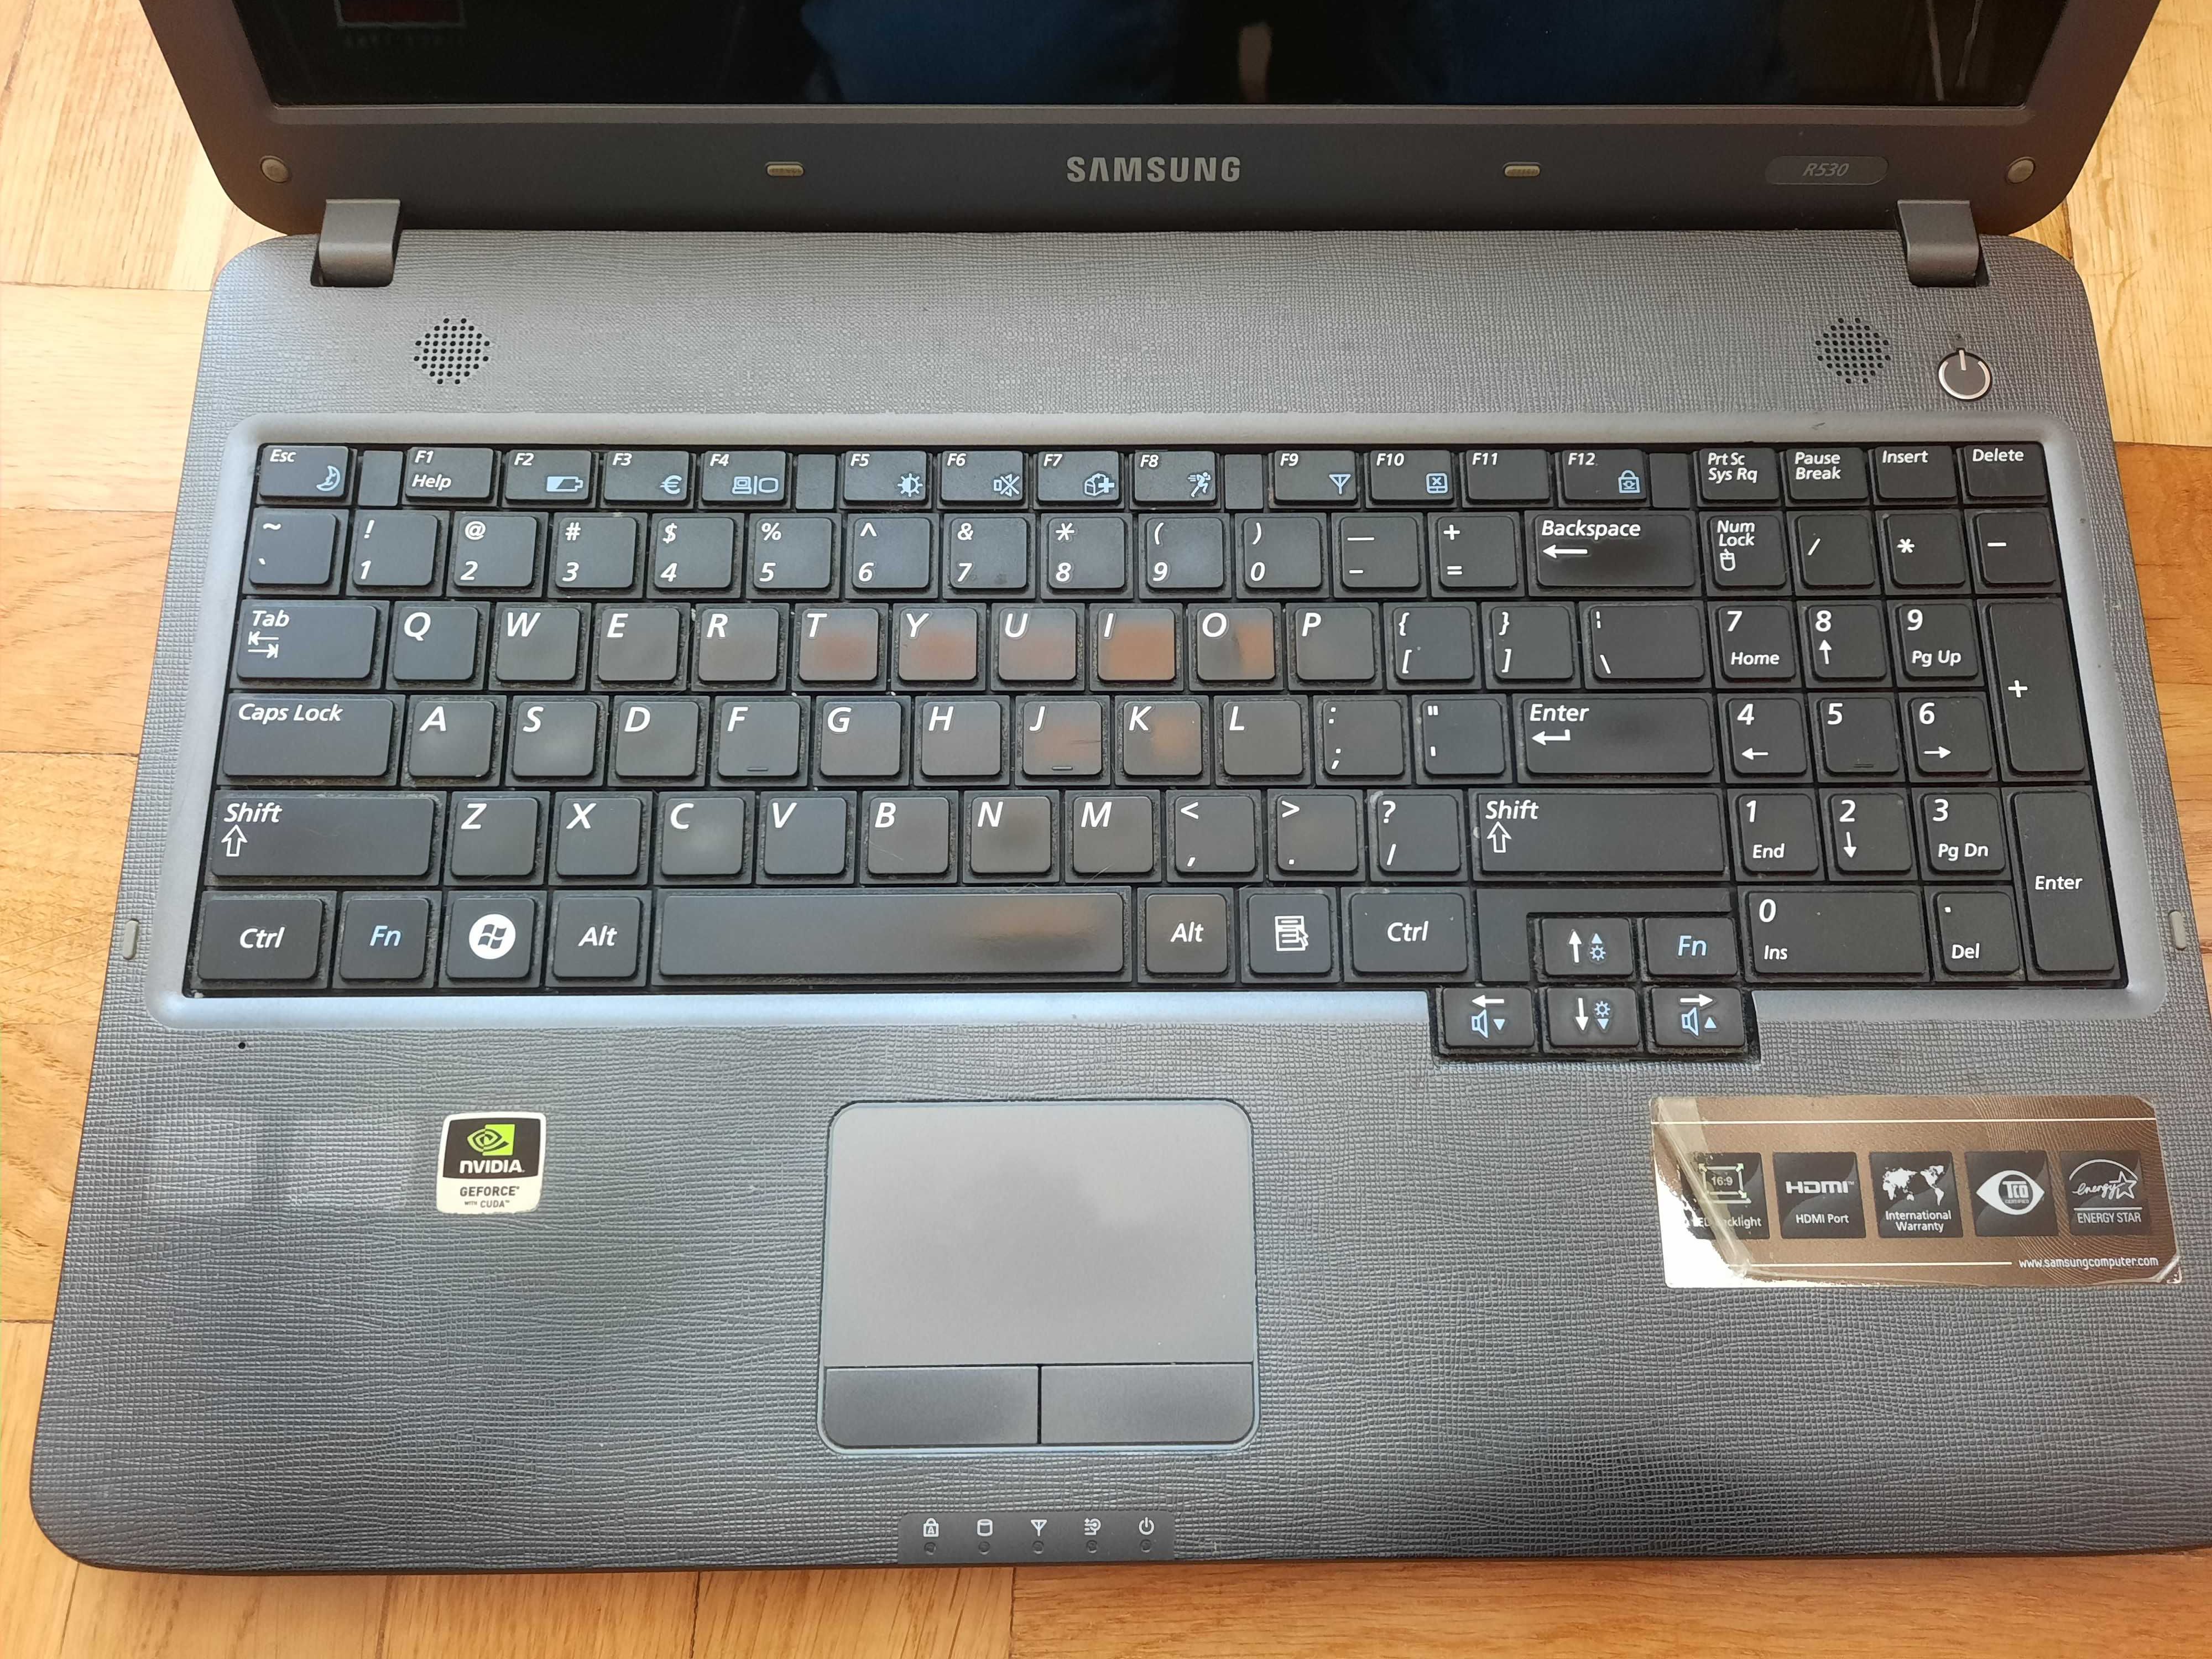 Laptop Samsung R530 T4500 2,3 Ghz, 4GB, HDD 500GB GWARANCJA, Rozbudowa